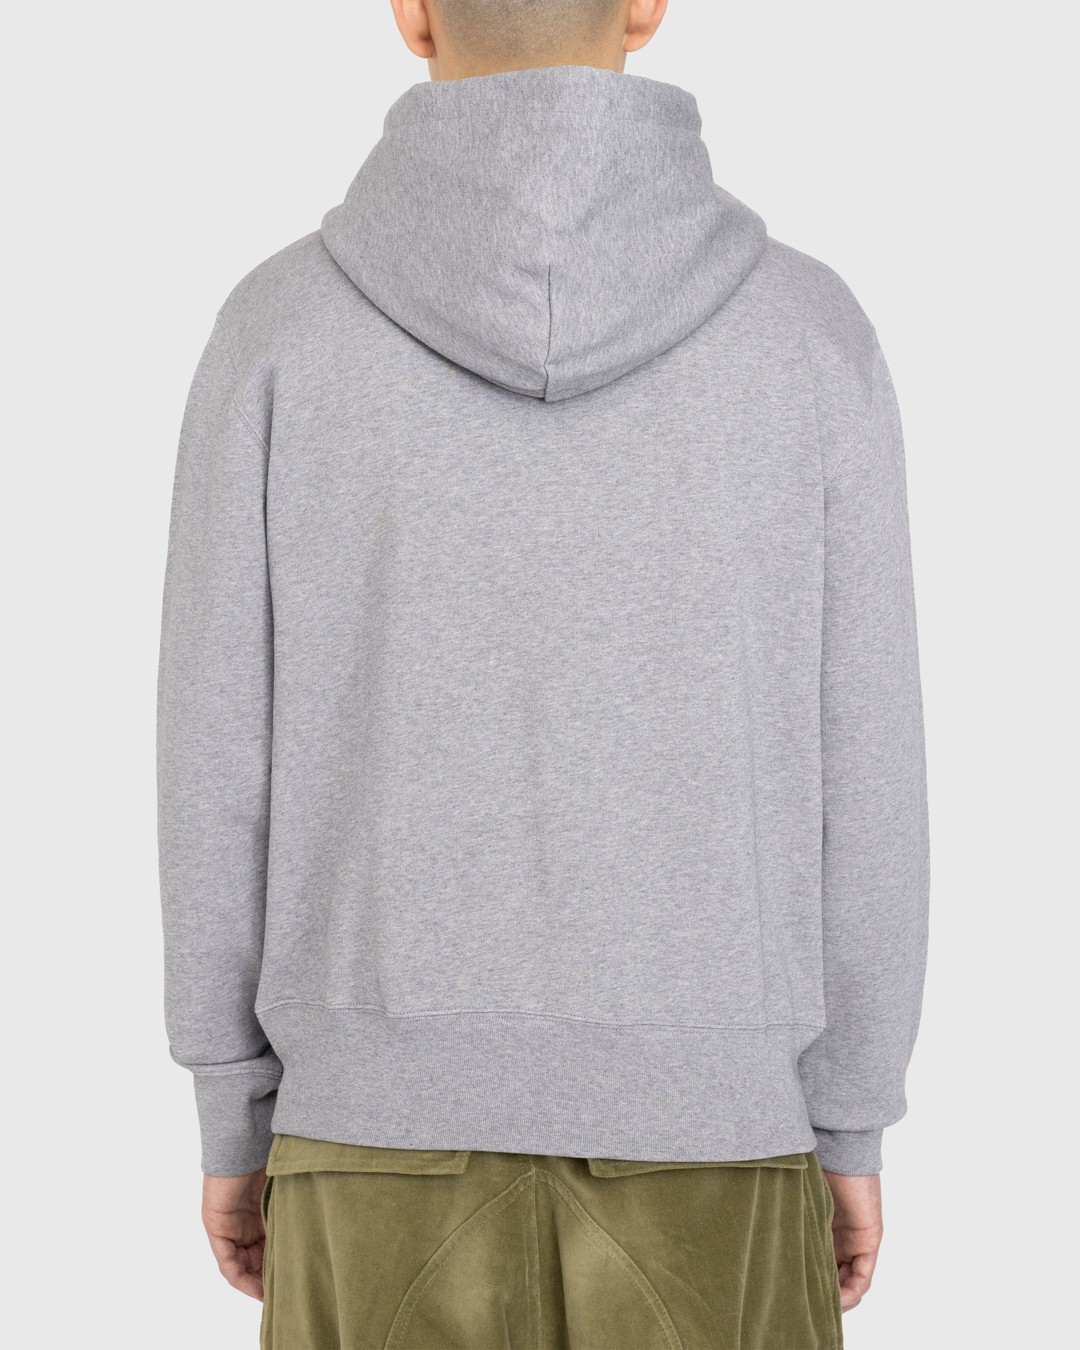 Acne Studios – Organic Cotton Hooded Sweatshirt Grey - Hoodies - Grey - Image 4